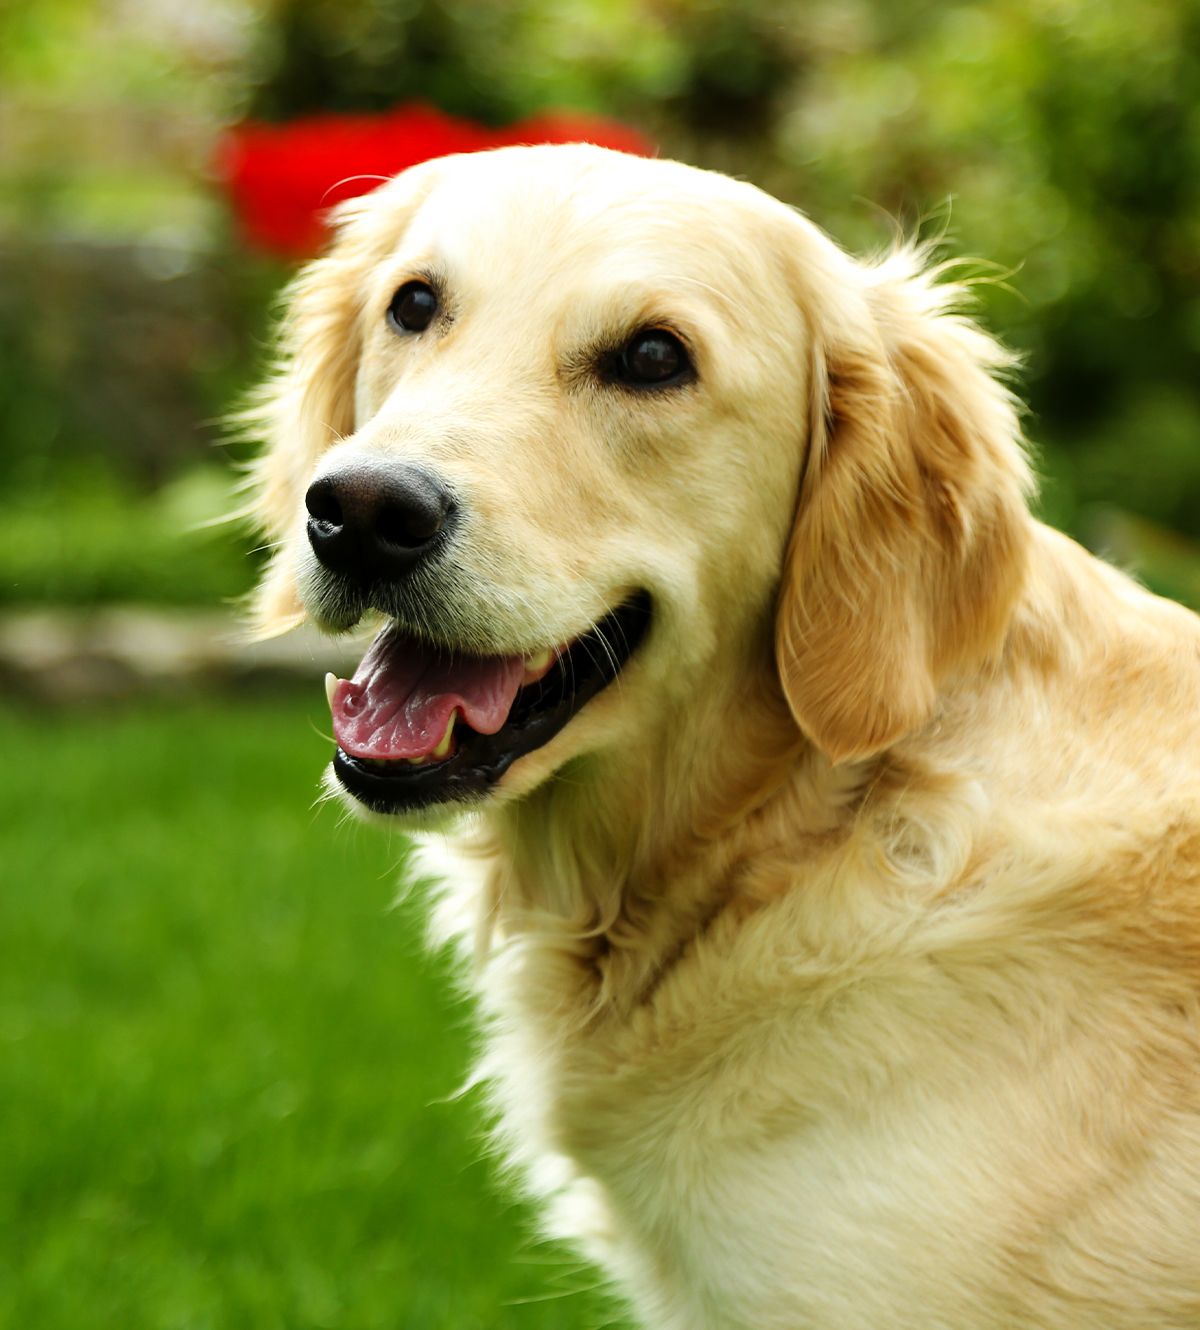 smiling golden retriever dog in the backyard